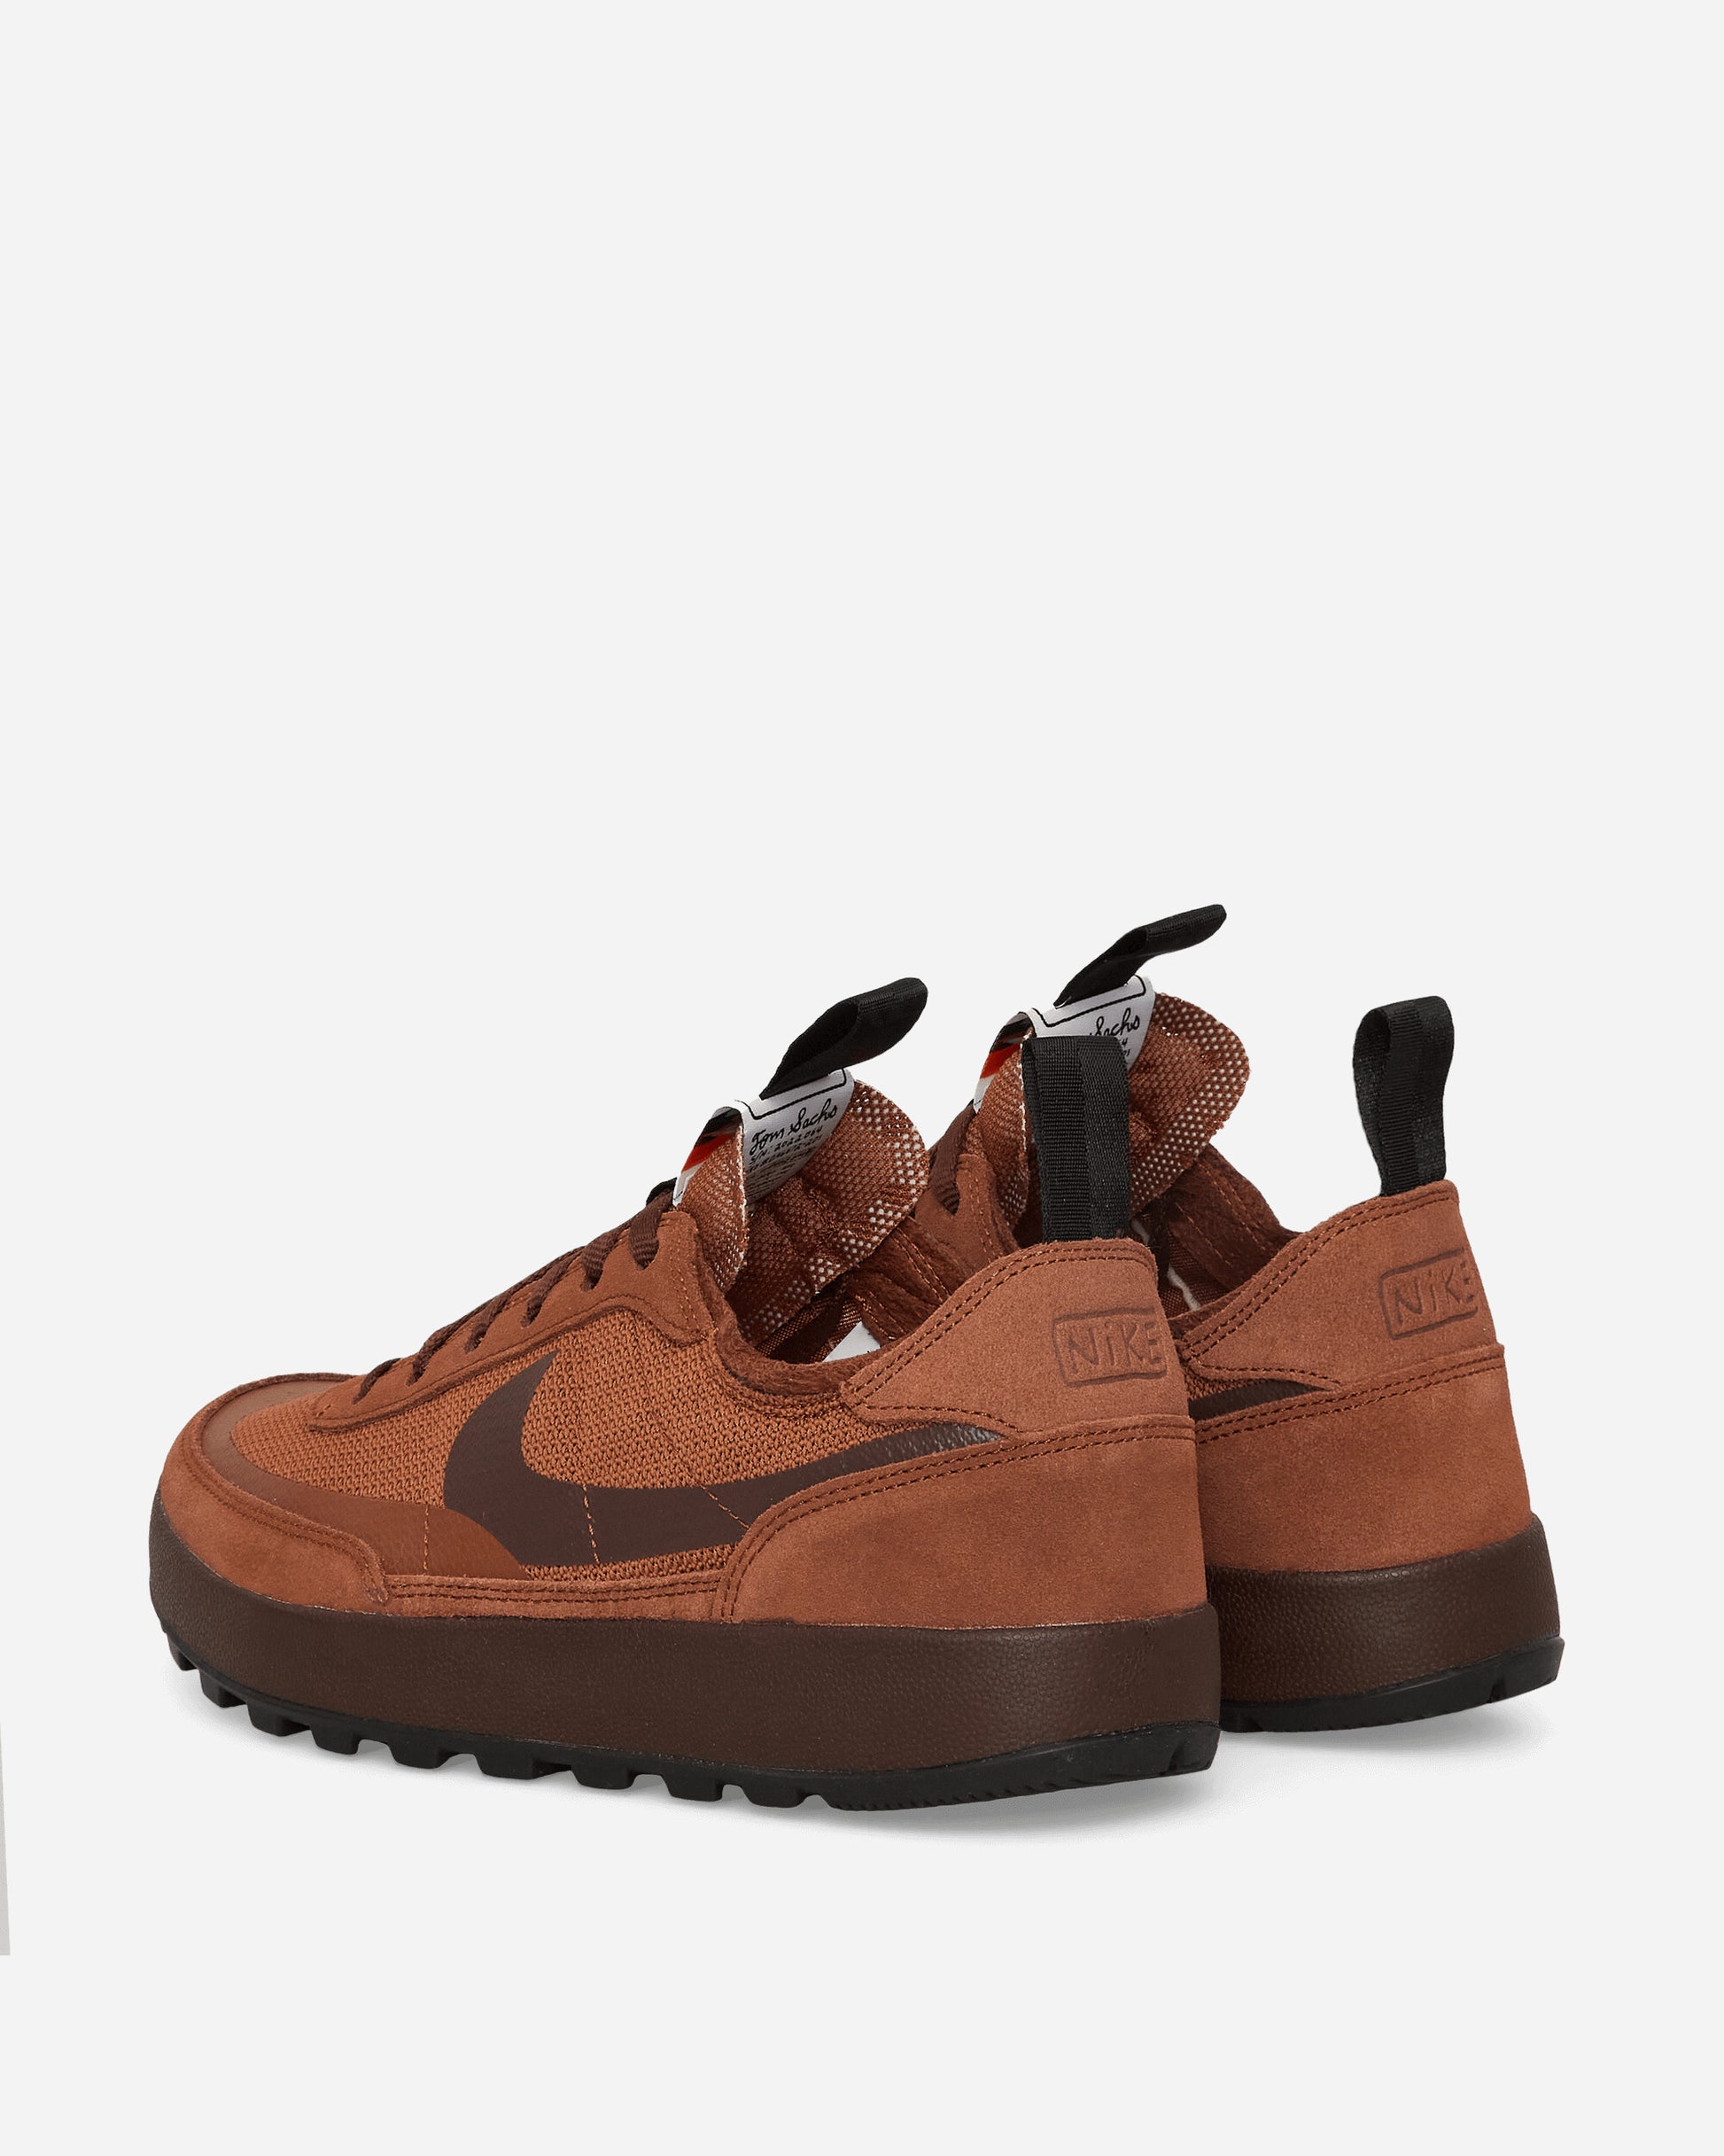 Nike Wmns General Purpose Shoe Pecan/Dk Field Brown Sneakers Low DA6672-201